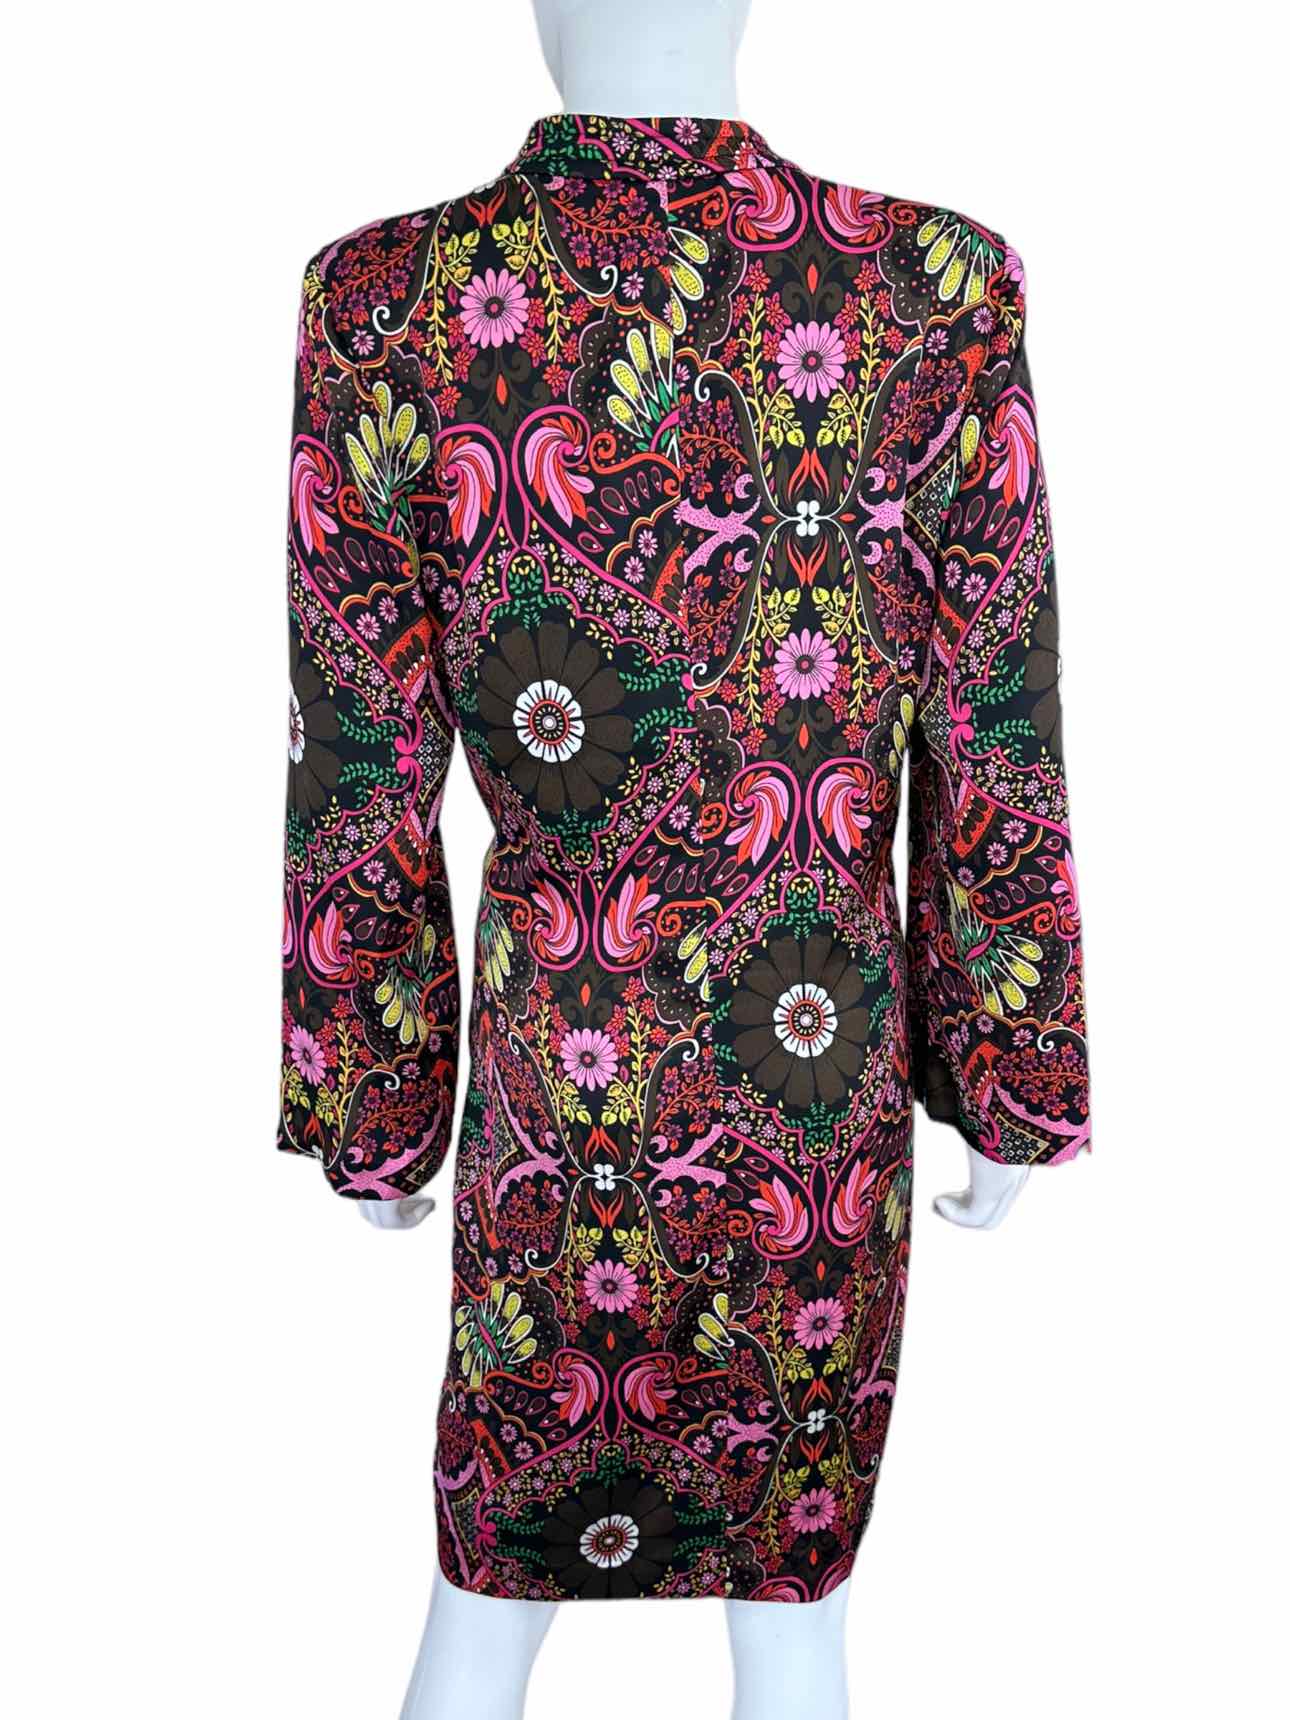 TRINA TURK NWT Floral Print CHRISTIE Dress Size 8